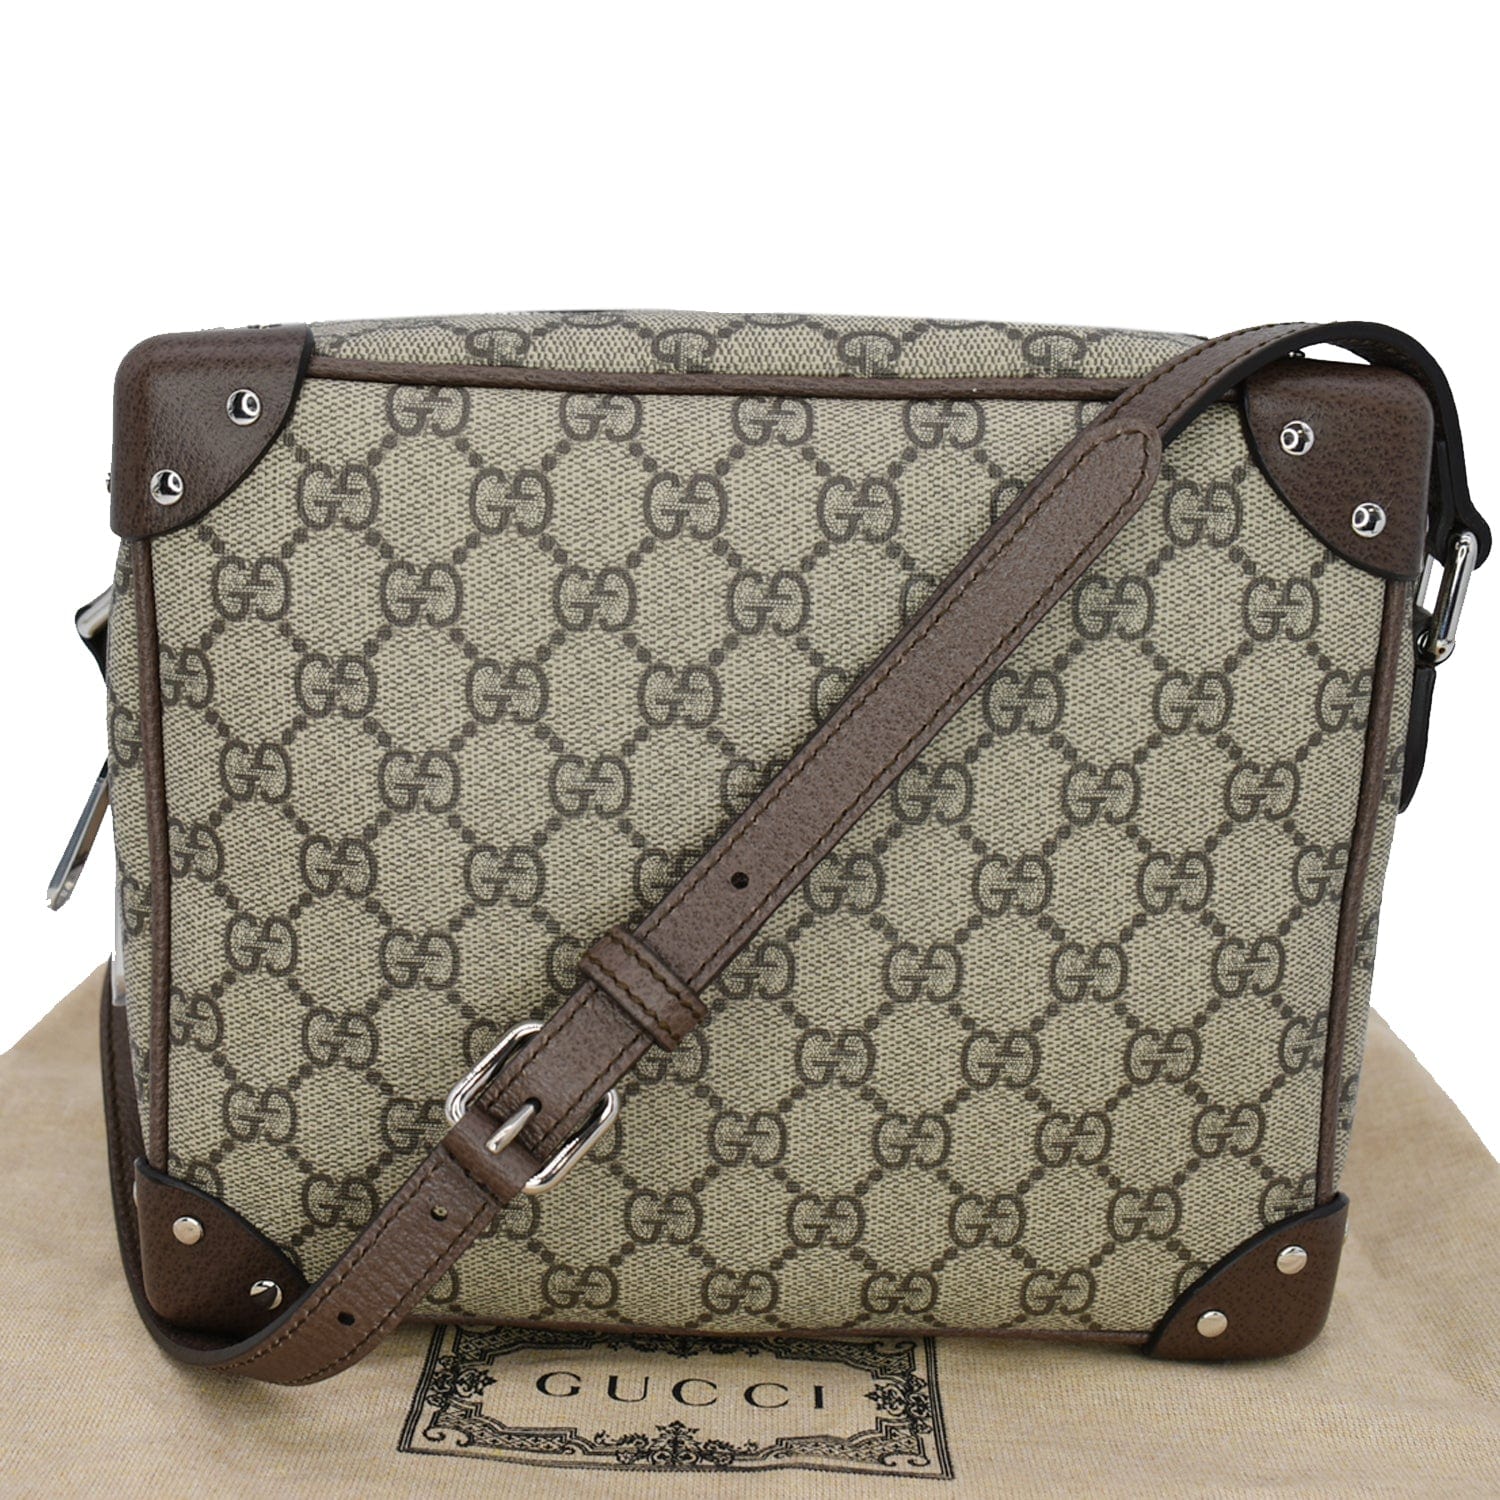 GUCCI-GG-Supreme-Leather-Waist-Bag-Crossbody-Bag-Navy-Beige-233269